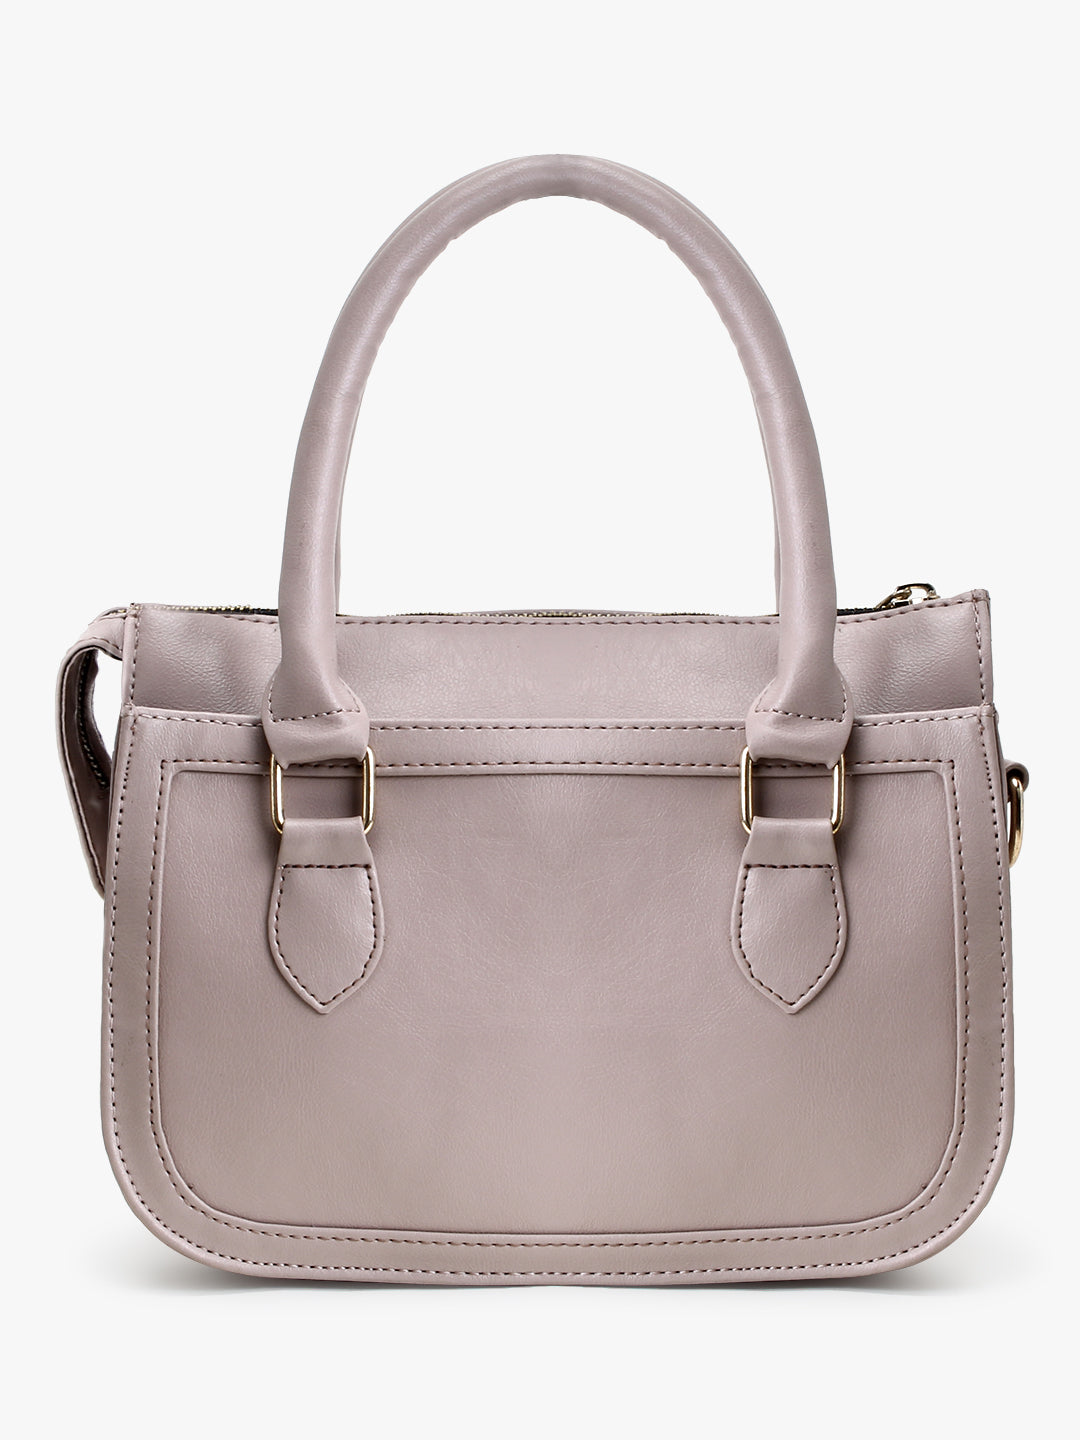 Pink satchel Handbag